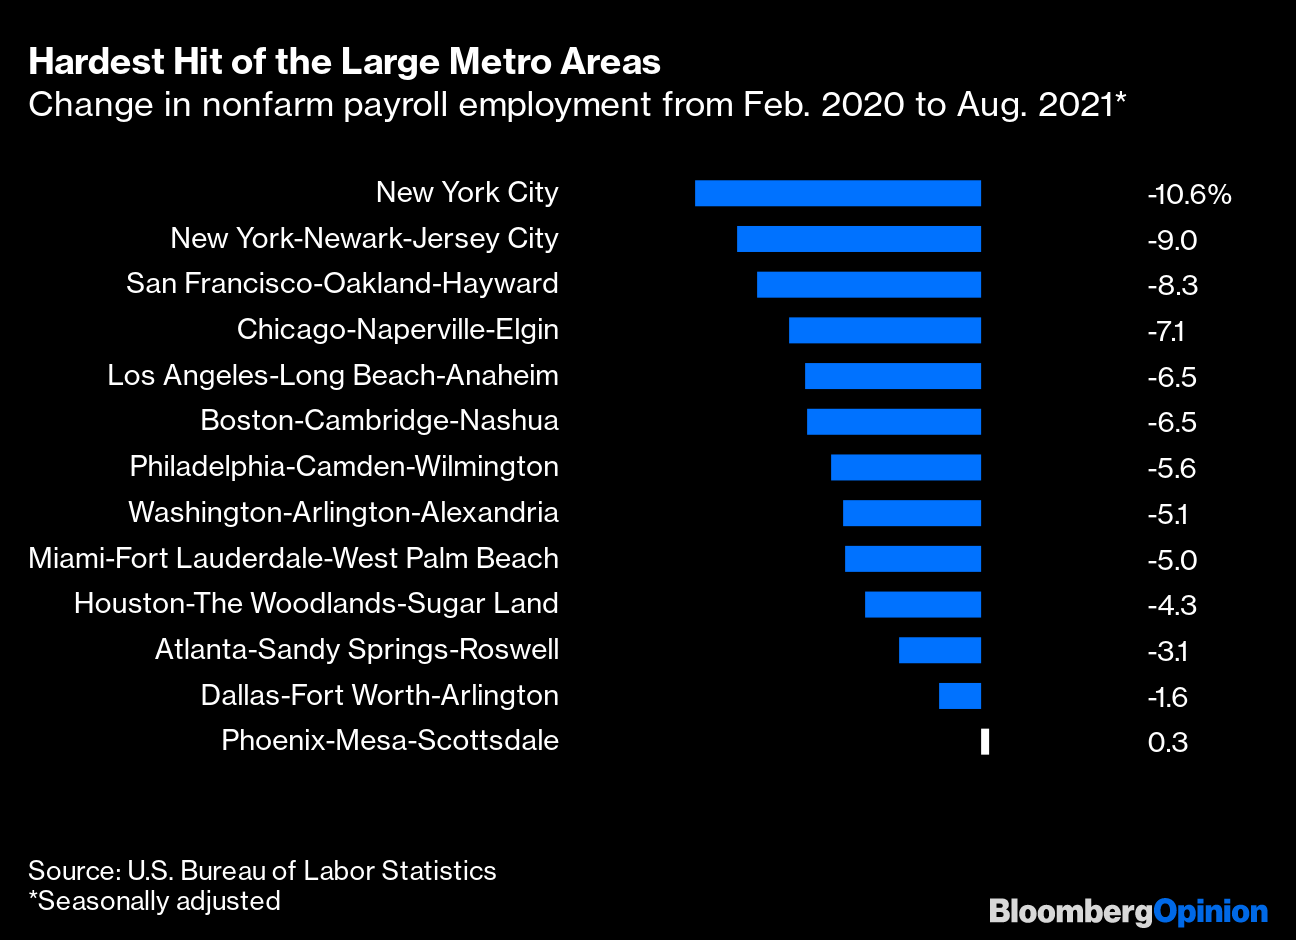 Labor Statistics for the New York City Region